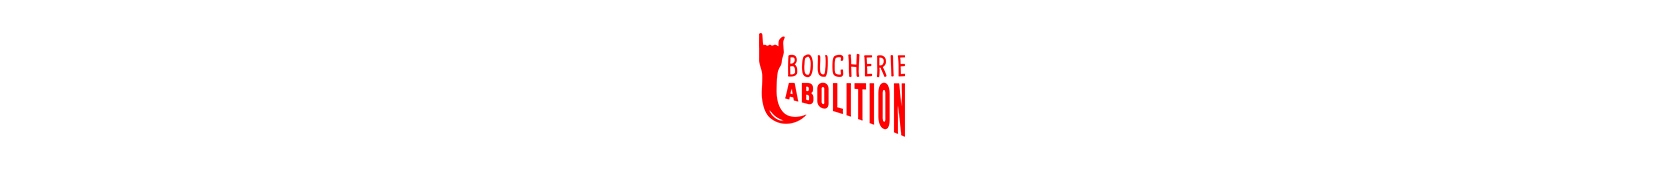 Boucherie Abolition